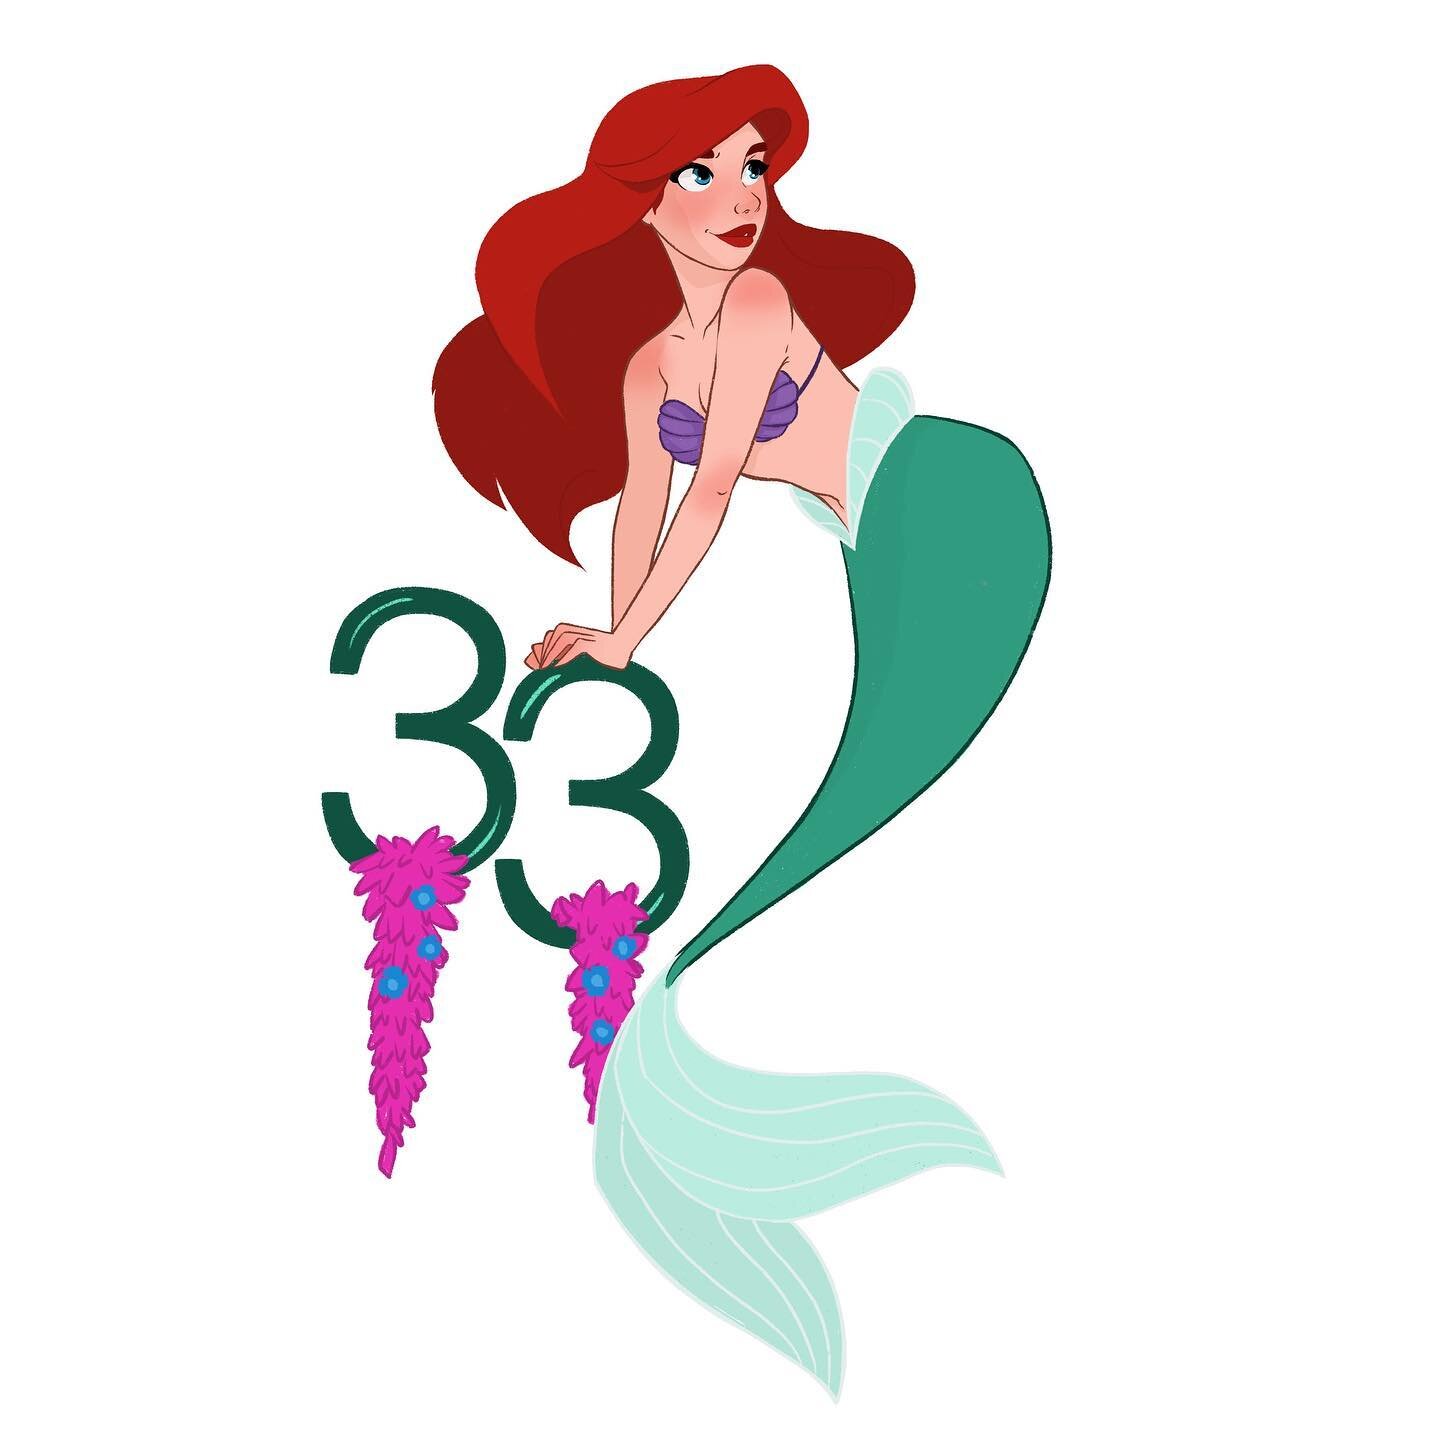 ✨Happy 33rd Anniversary to The Little Mermaid ✨ 
.
.
.

#disney #littlemermaid #disneyclassic #art #littlemermaid30th #ariel #illustration #digitalart #procreate #ipadpro #artistsoninstagram #artoftheday #characterdesign #artofinstagram #disneyprince